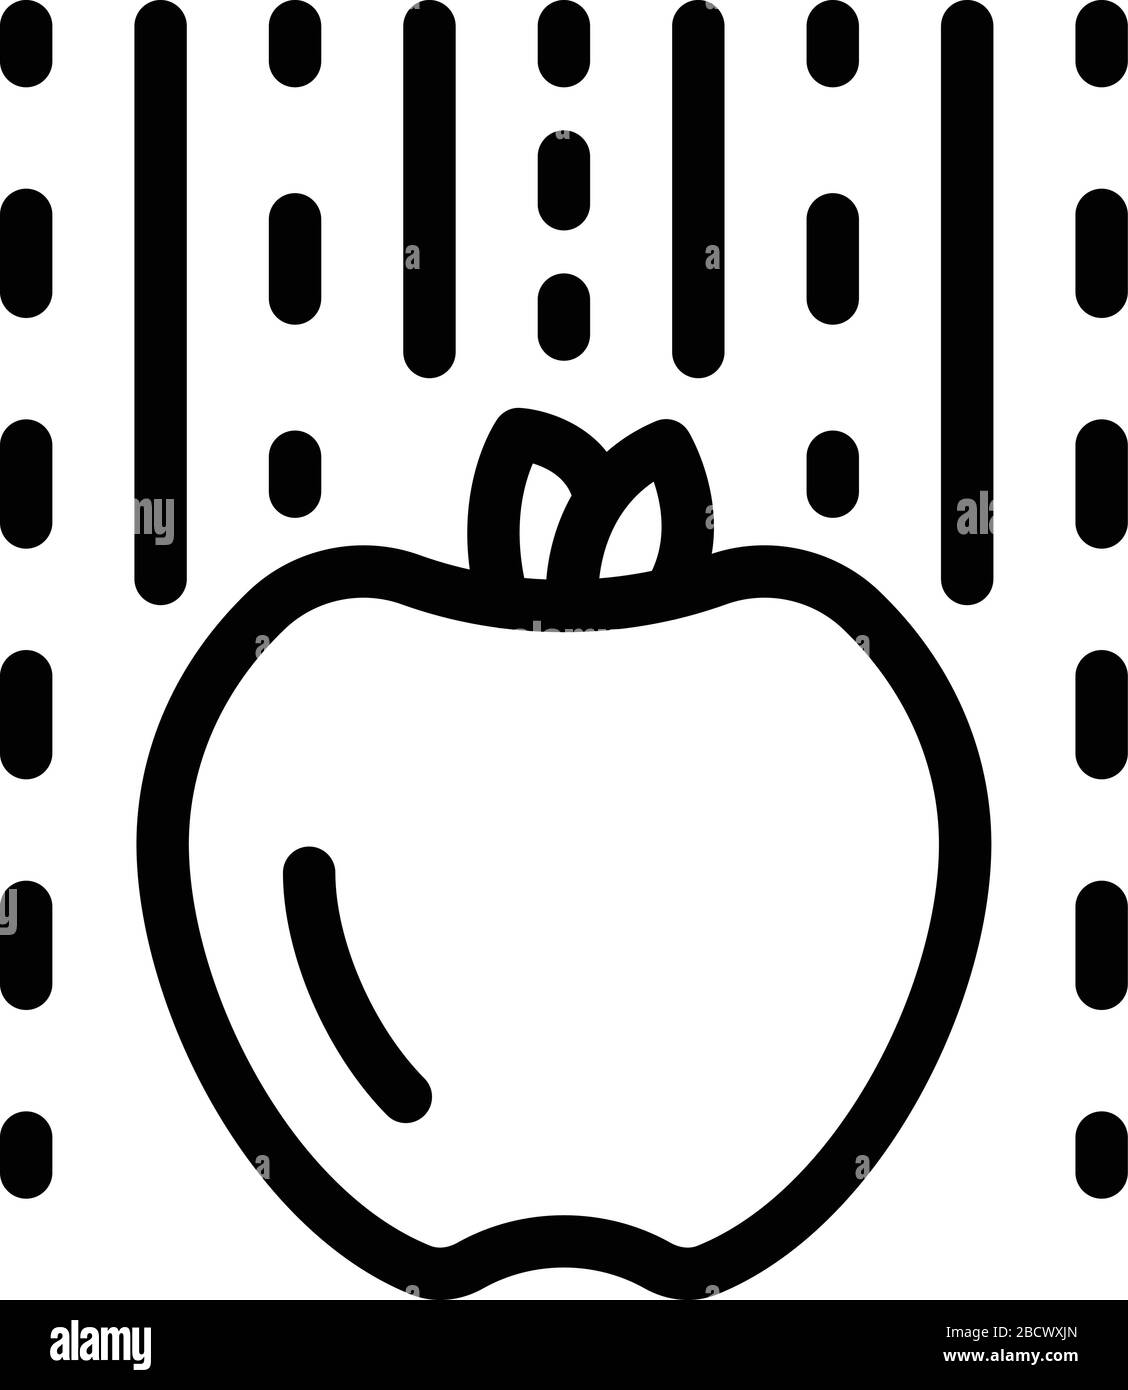 Apple Herbstsymbol, Gliederstil Stock Vektor